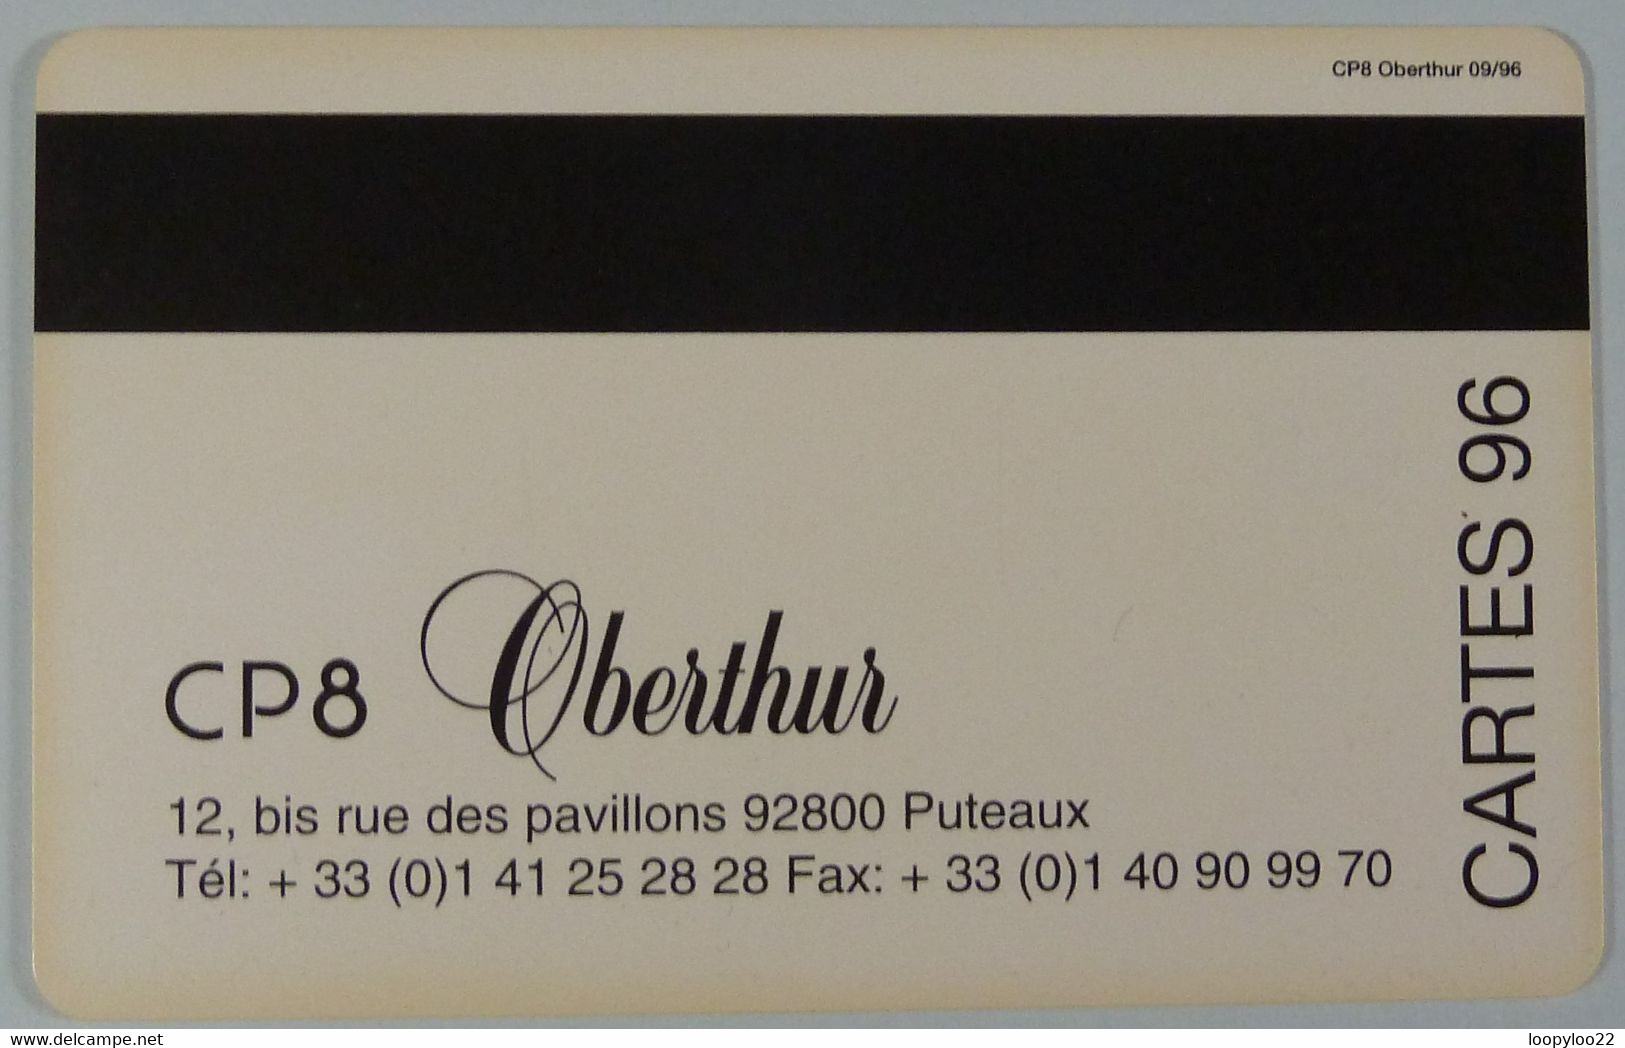 FRANCE - Chip - CP8 - Oberthur - Cartes 96 - Interner Gebrauch